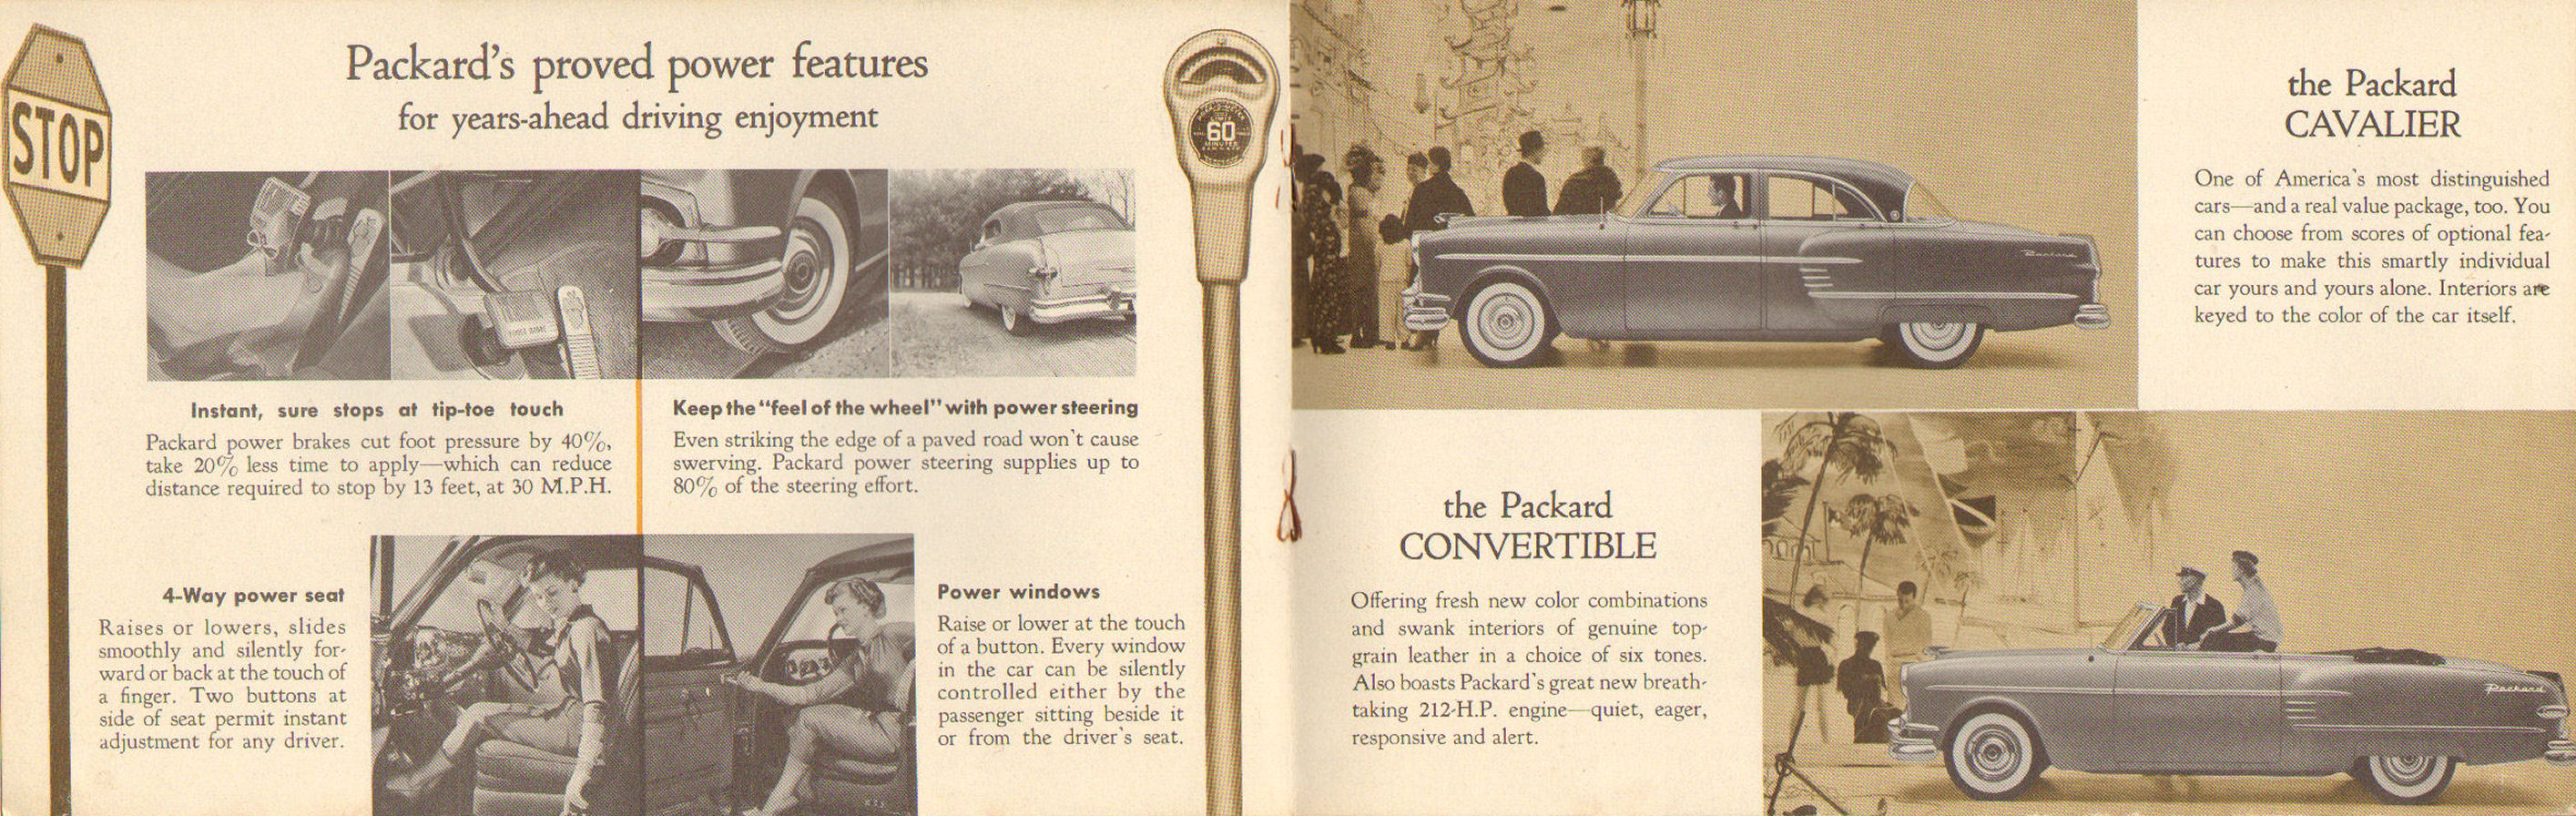 1954_Packard_Personal_Demo_Mailer-08-09